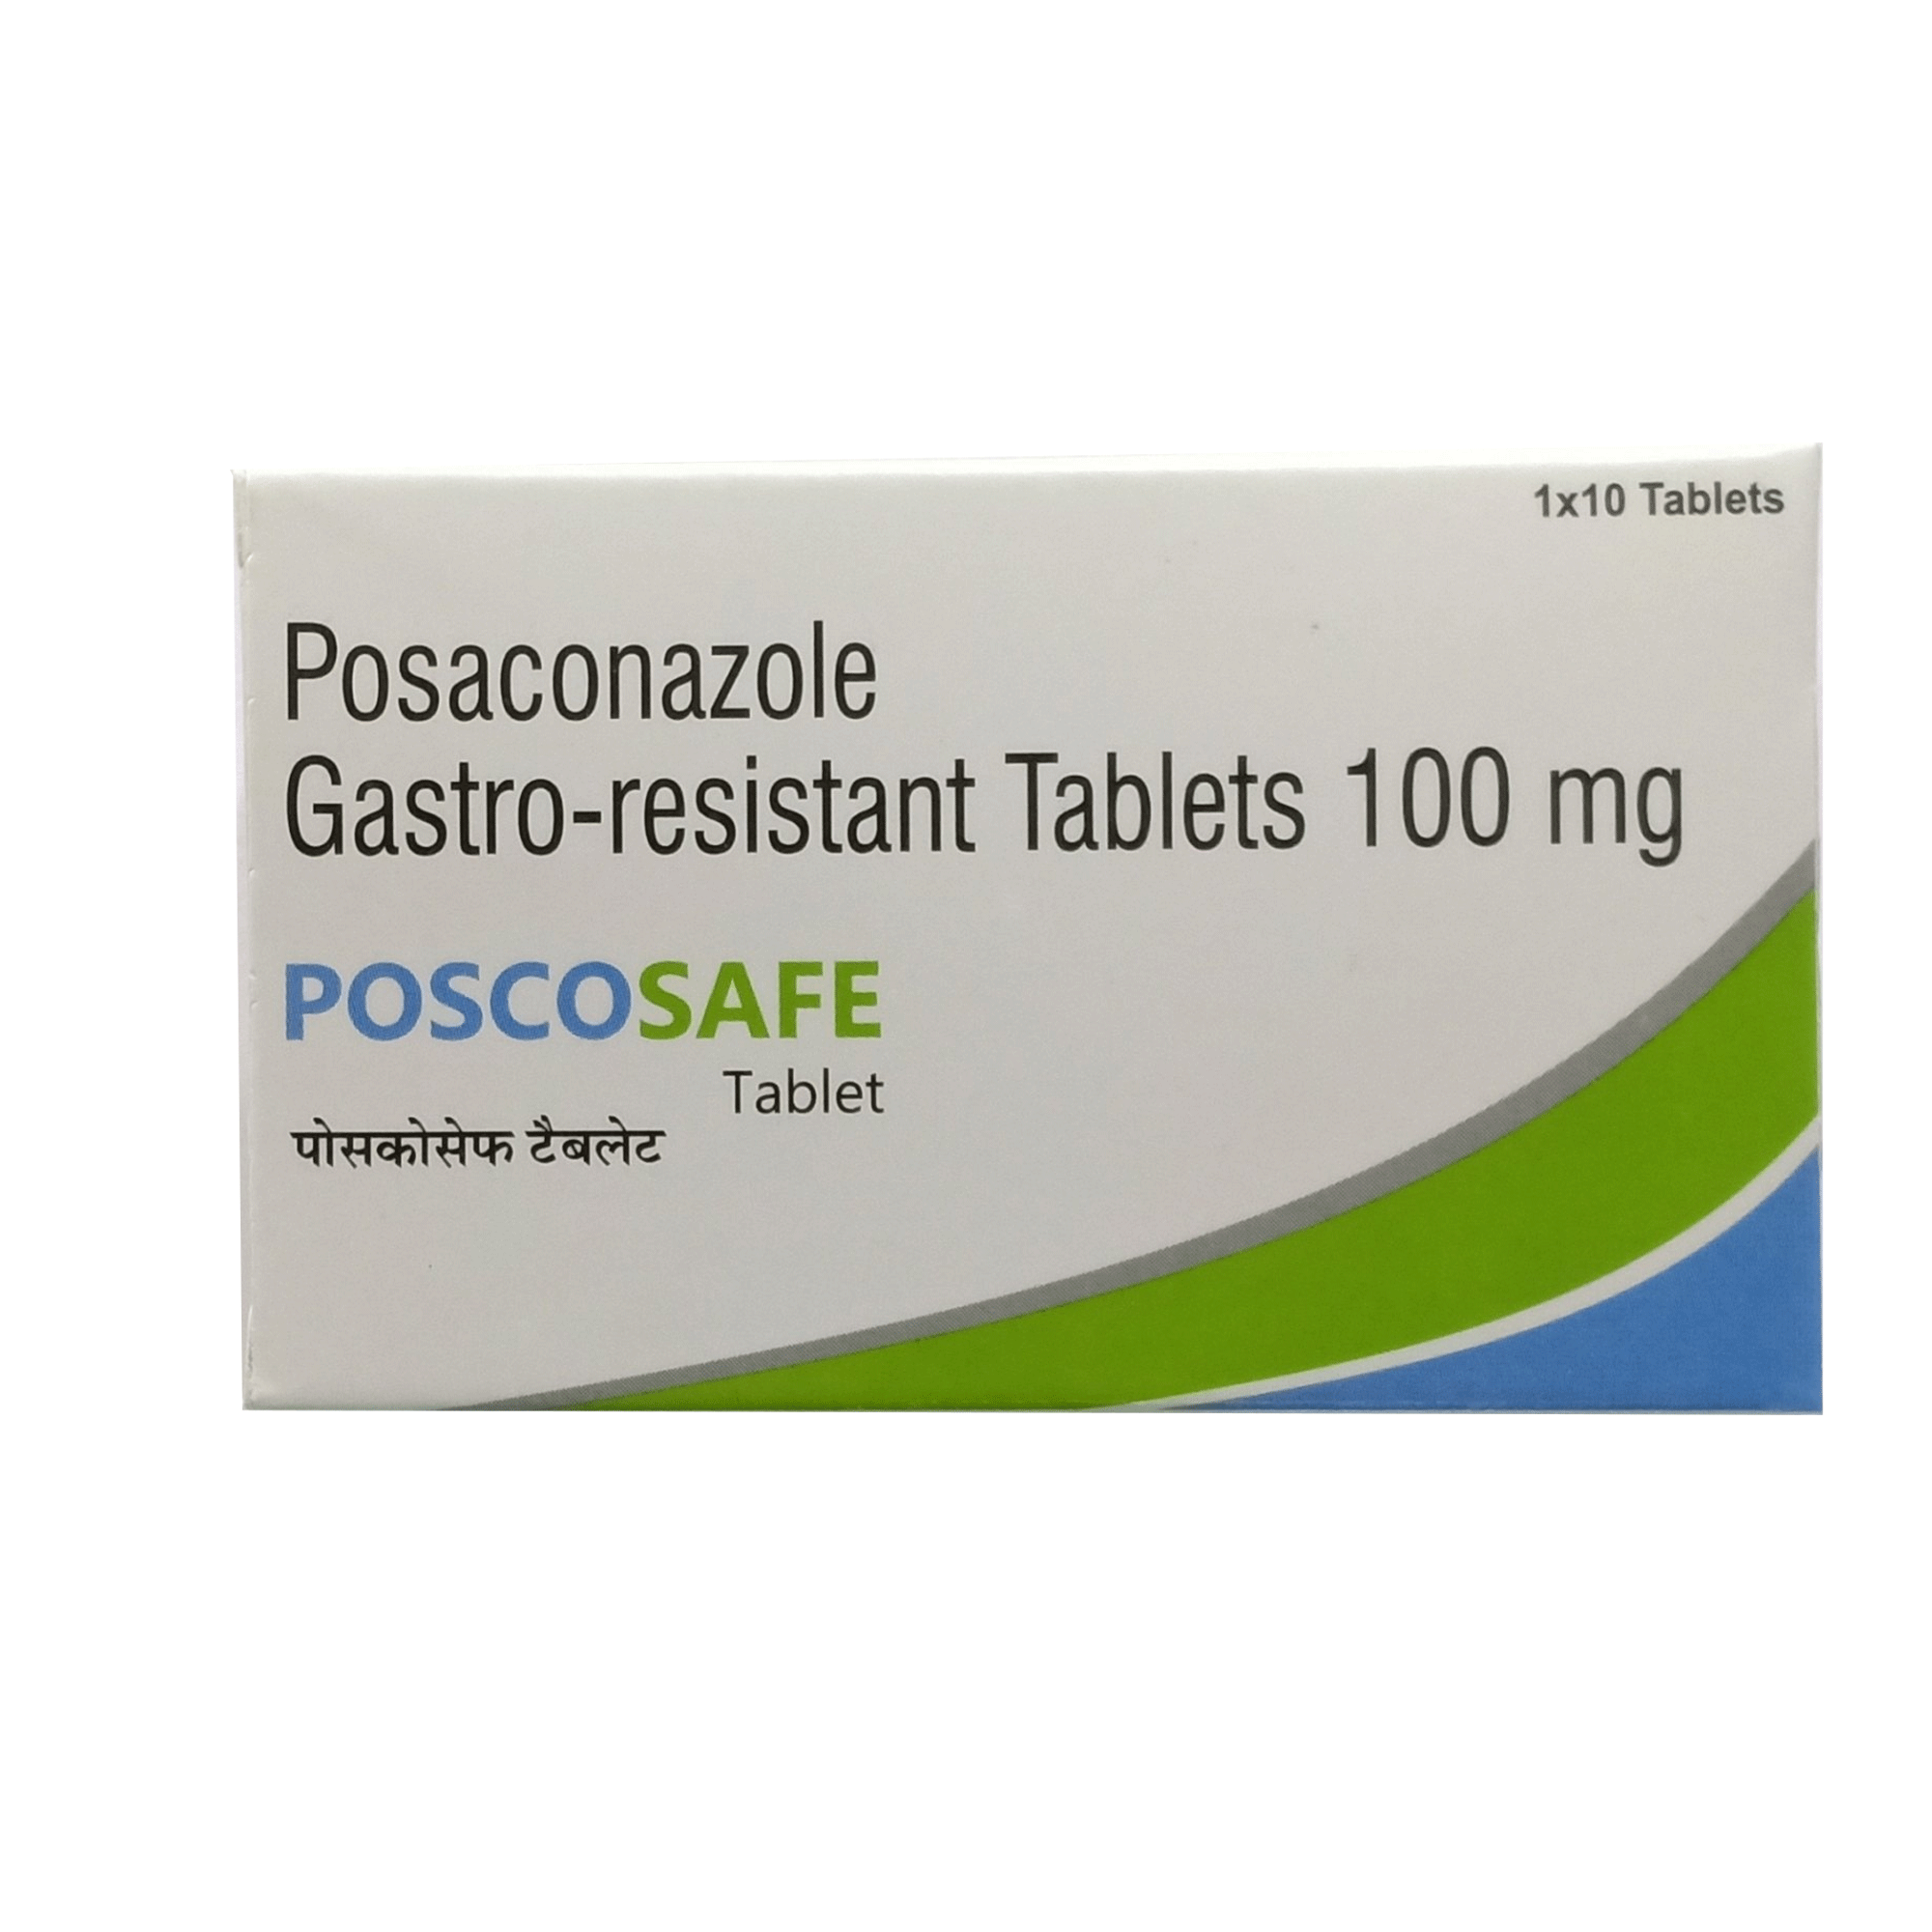 Thuoc-Poscosafe-100-mg-la-thuoc-gi